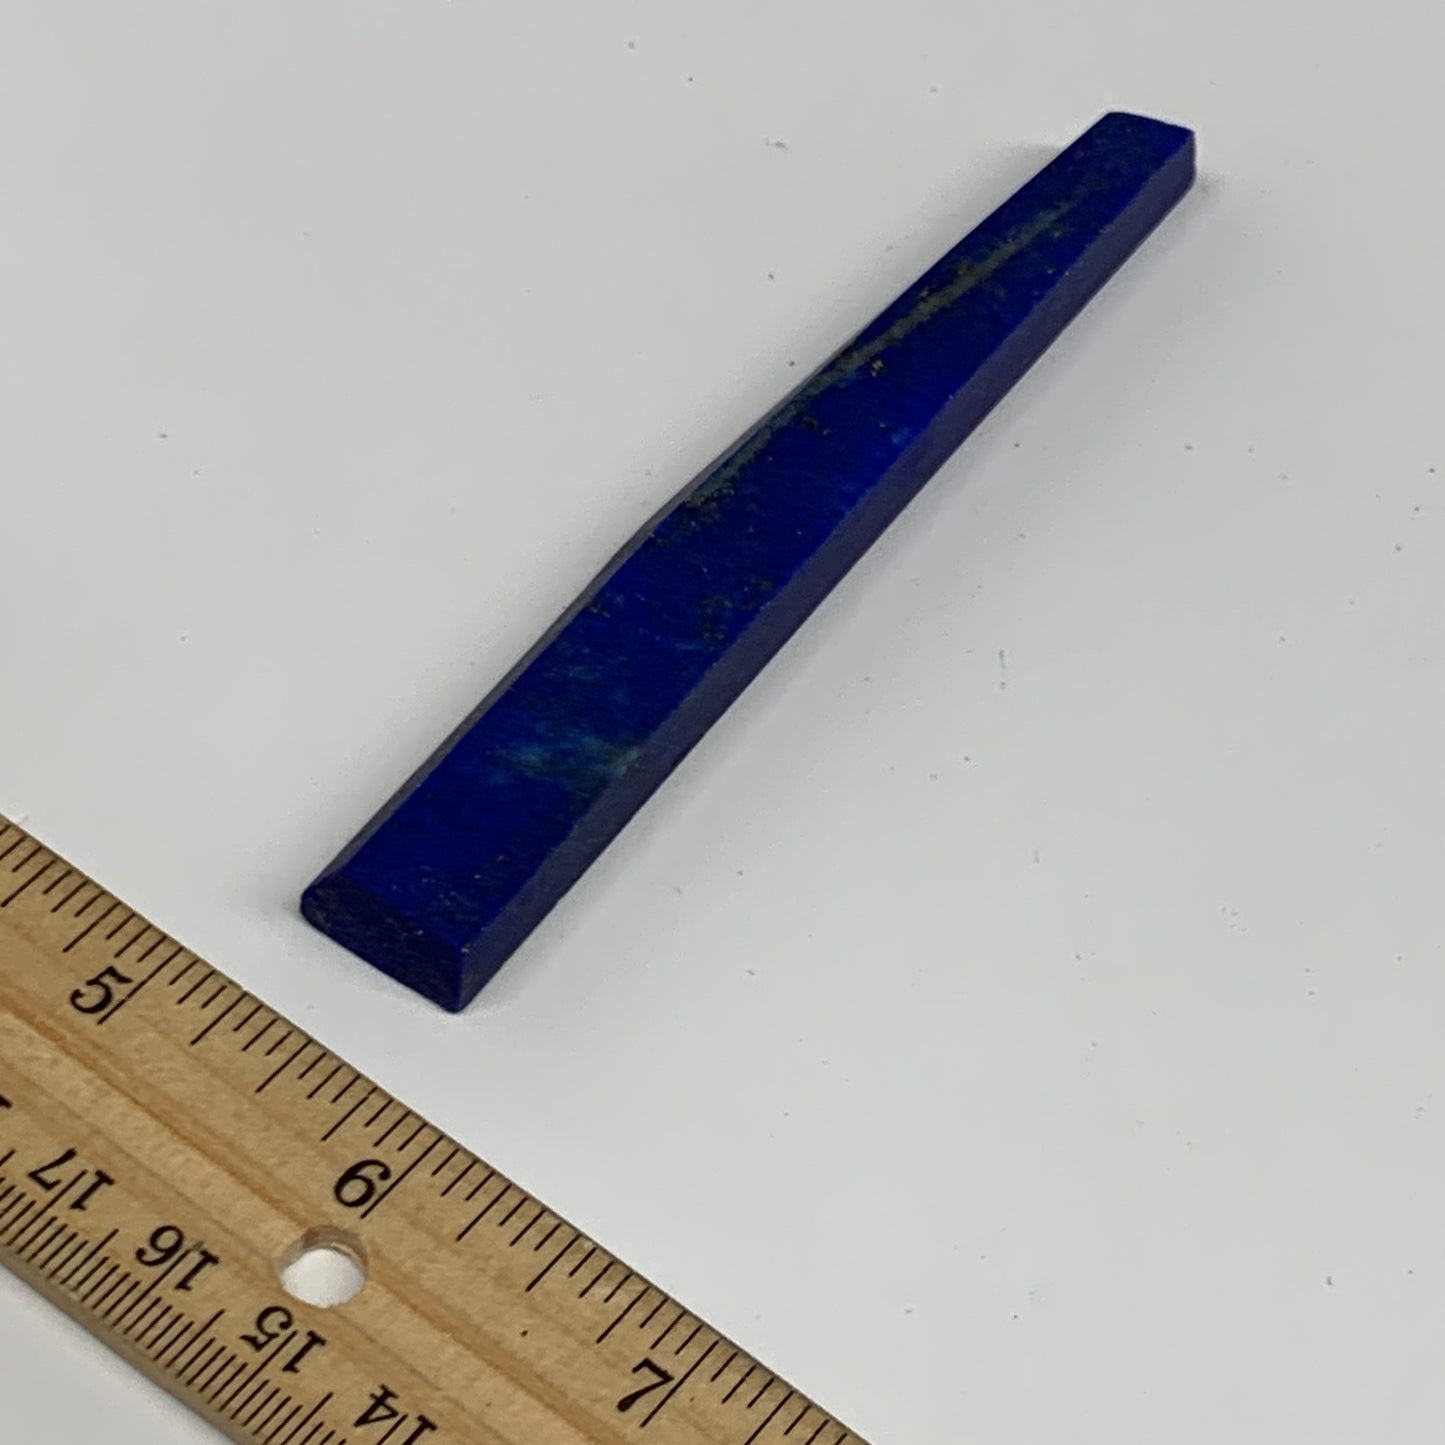 40.3g, 4.3"x0.6"x0.4", High Grade Natural Rough Lapis Lazuli @Afghanistan,B32672